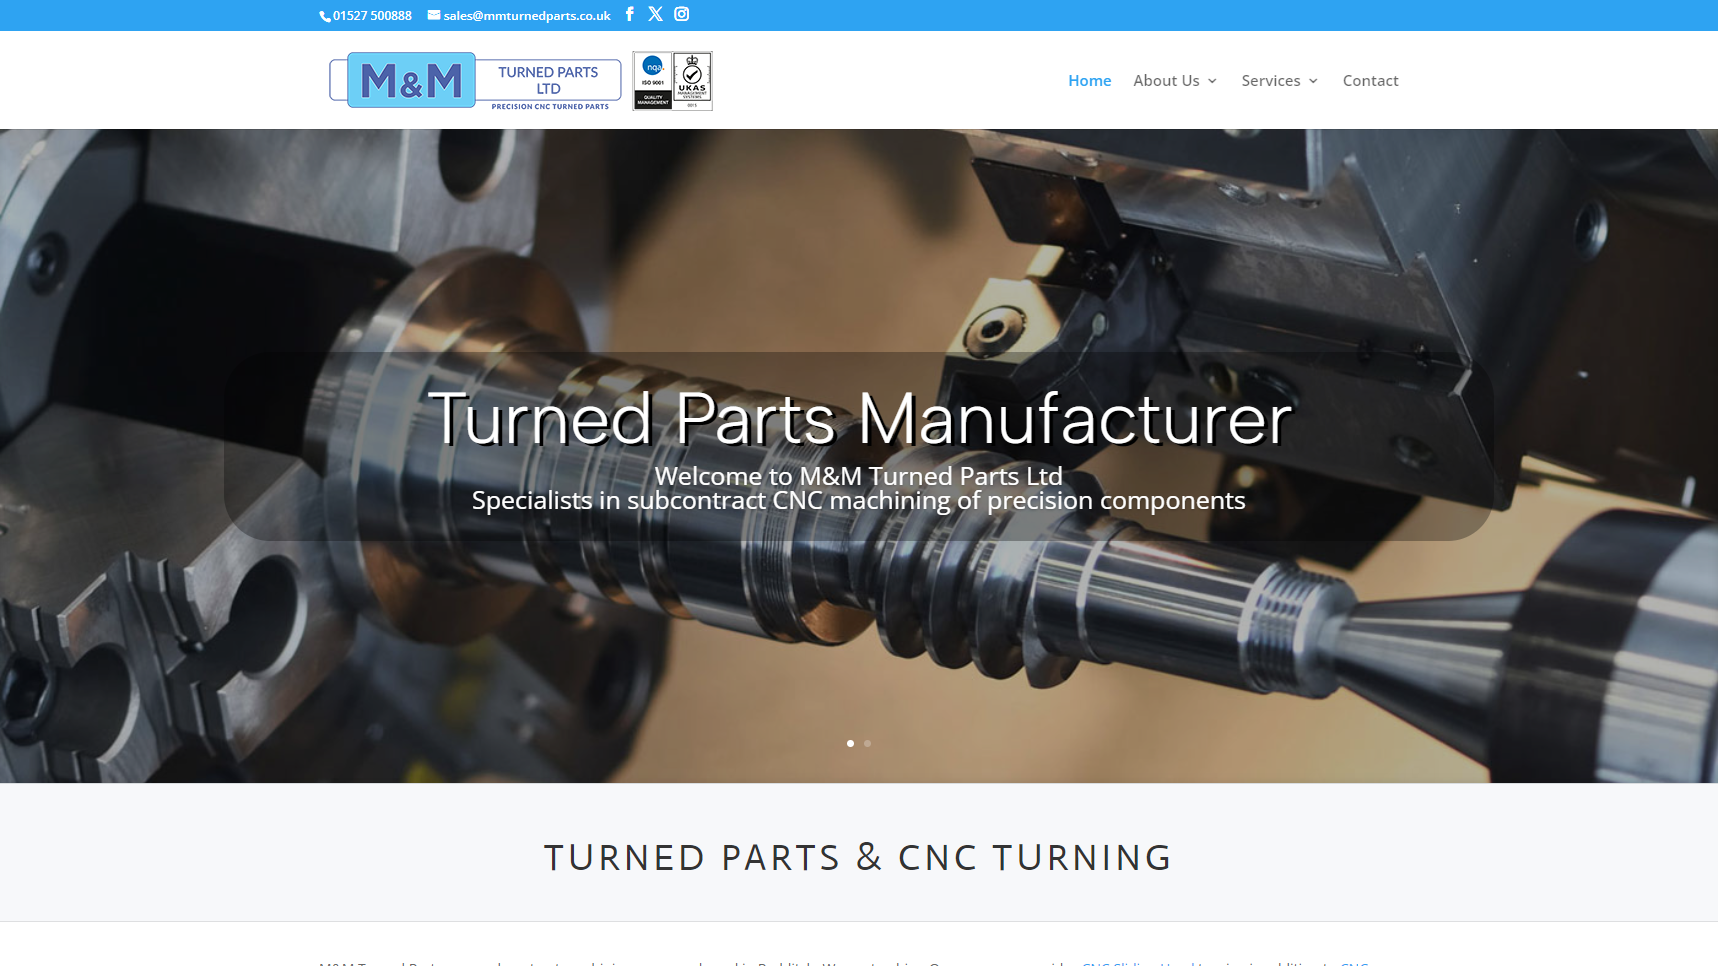 MM Turned Parts - Turned Parts Manufacturer